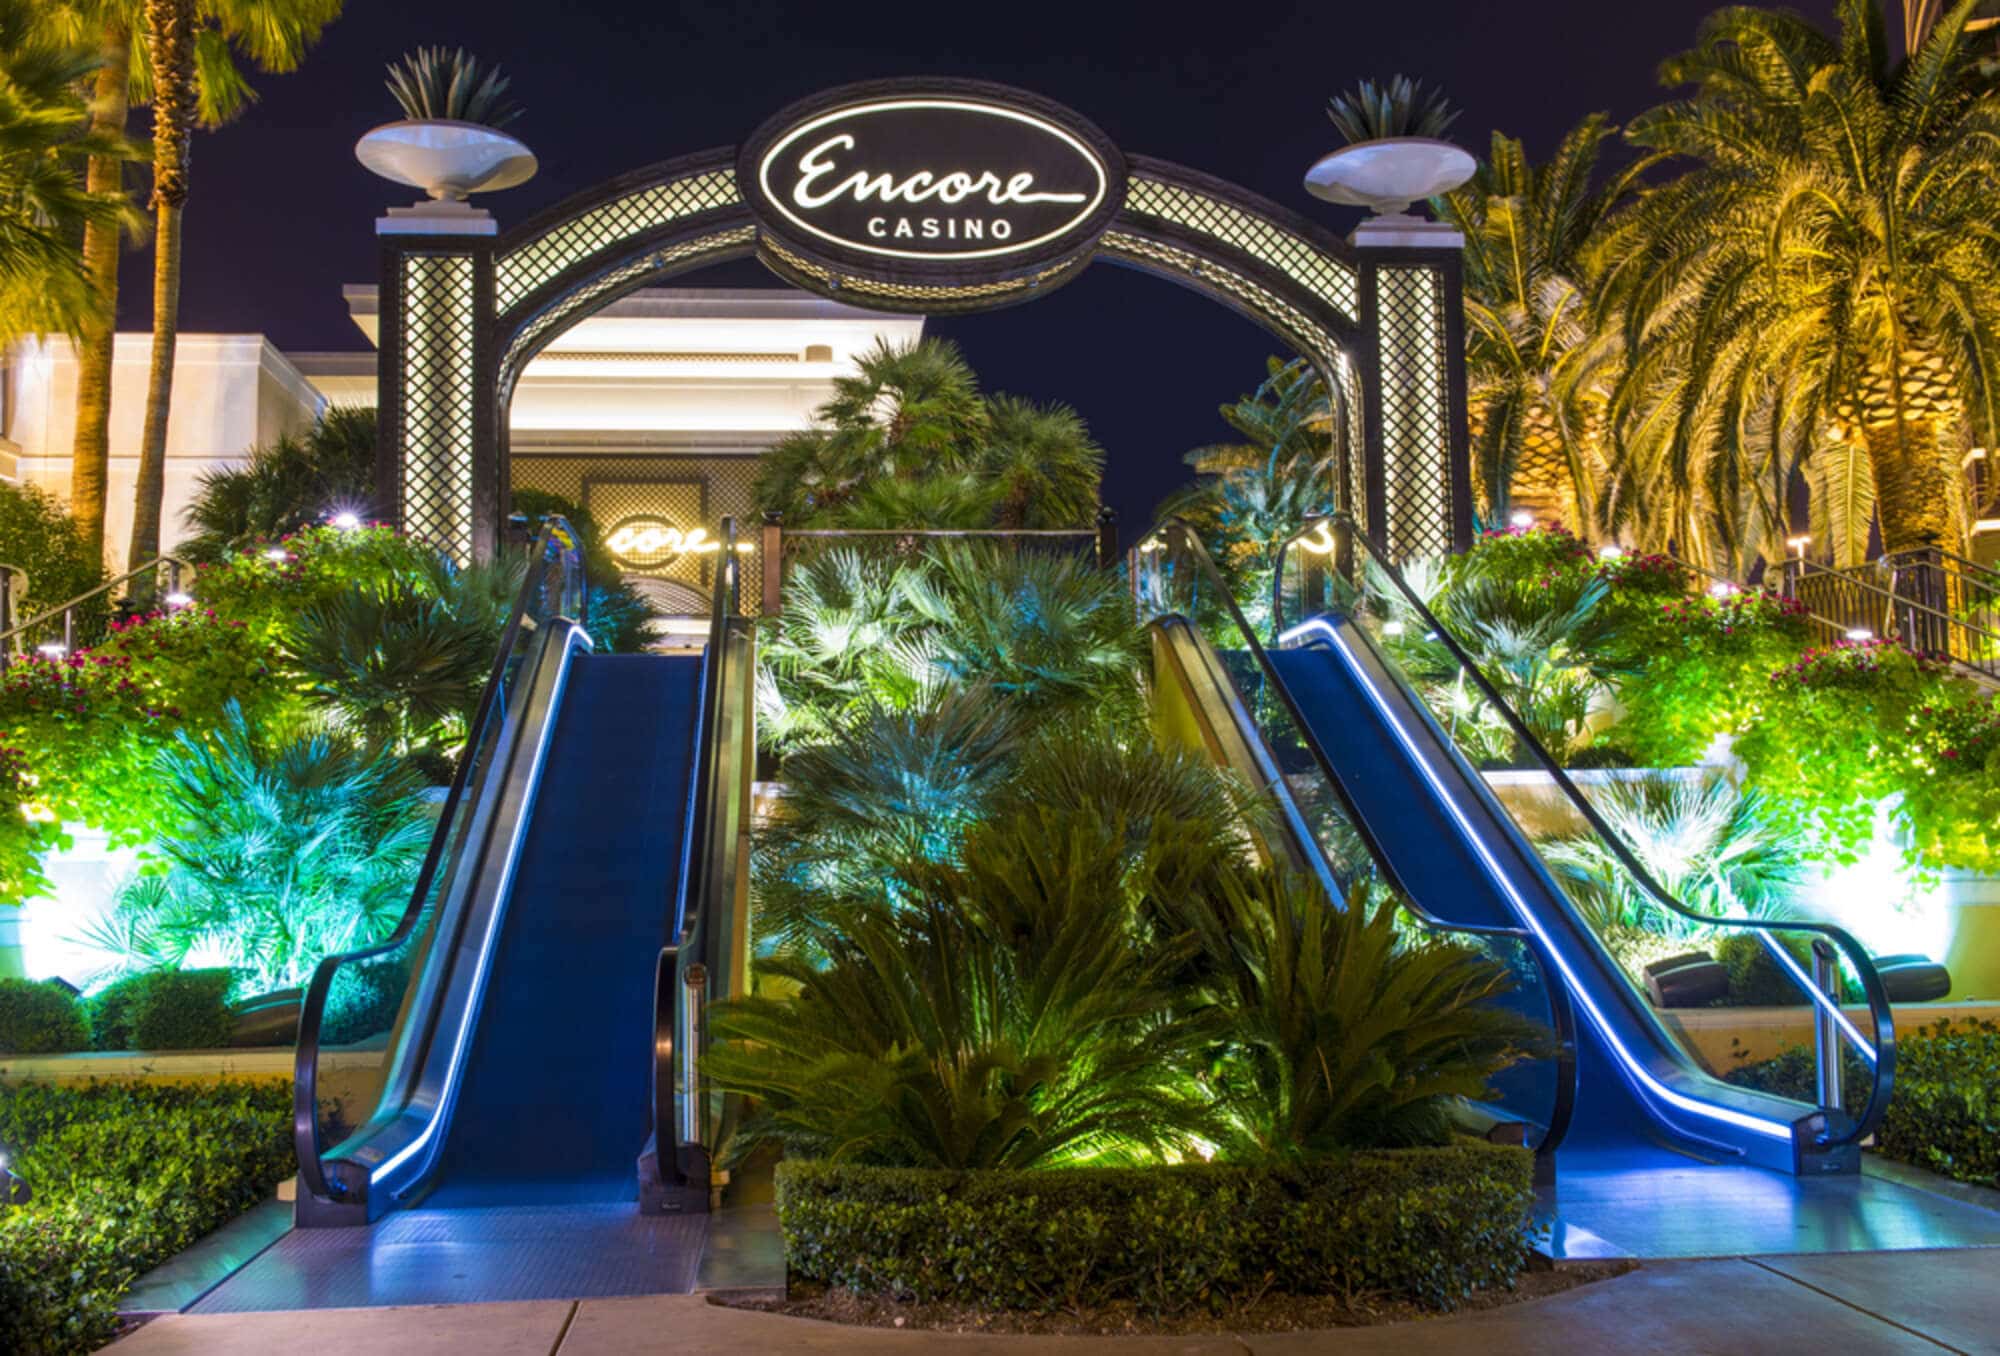 escalator leading up to Encore casino